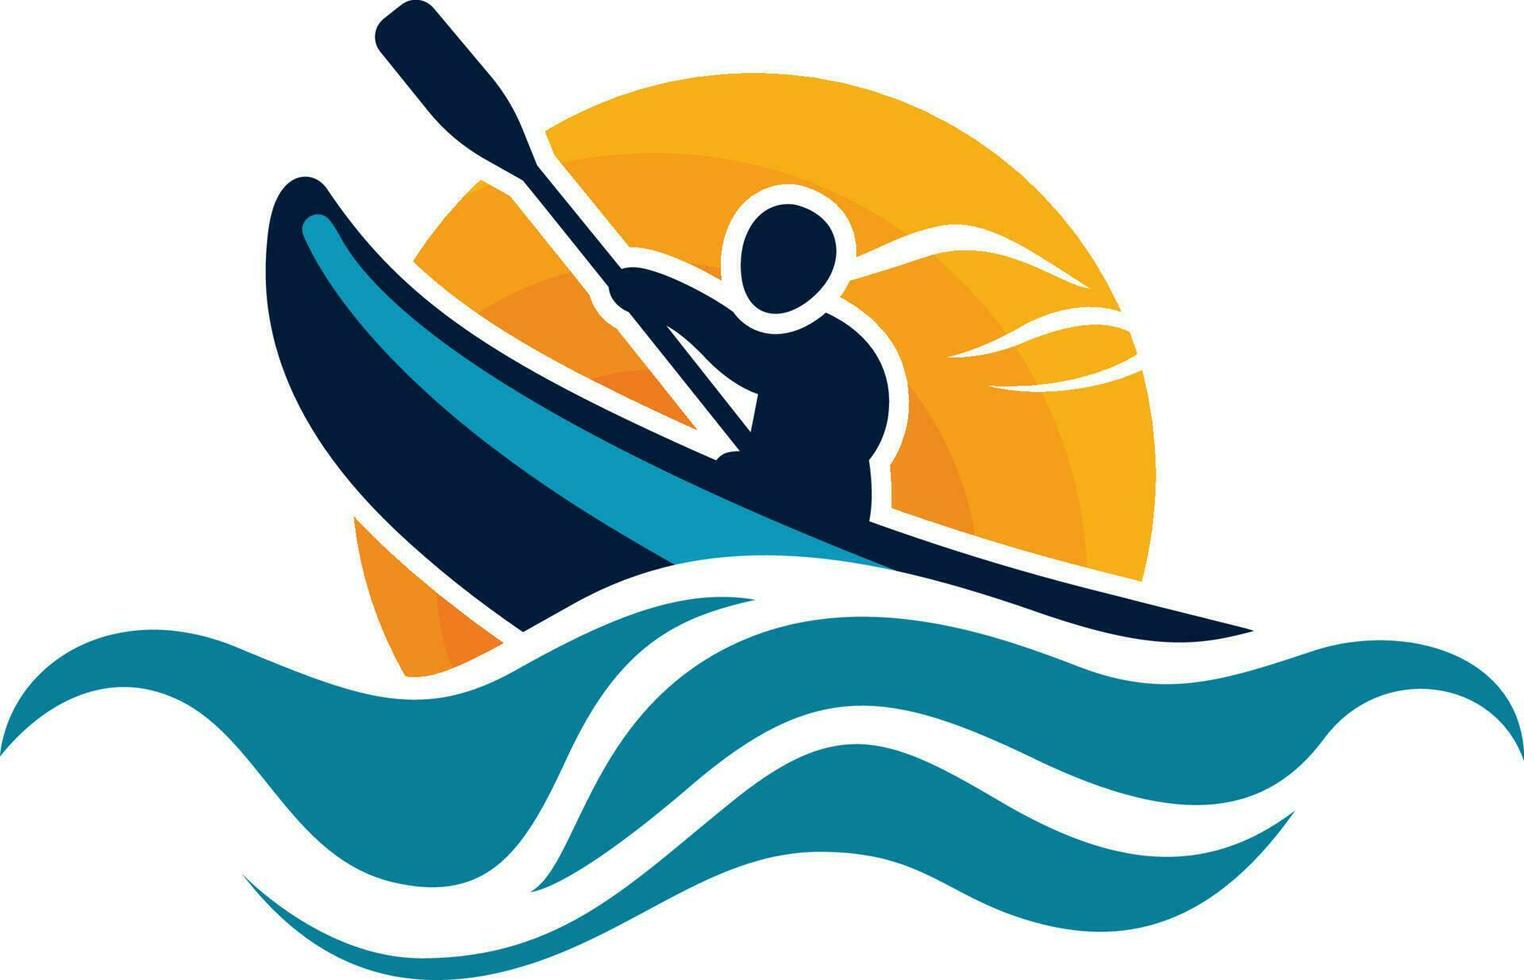 Kayak water sport logo template vector illustration.